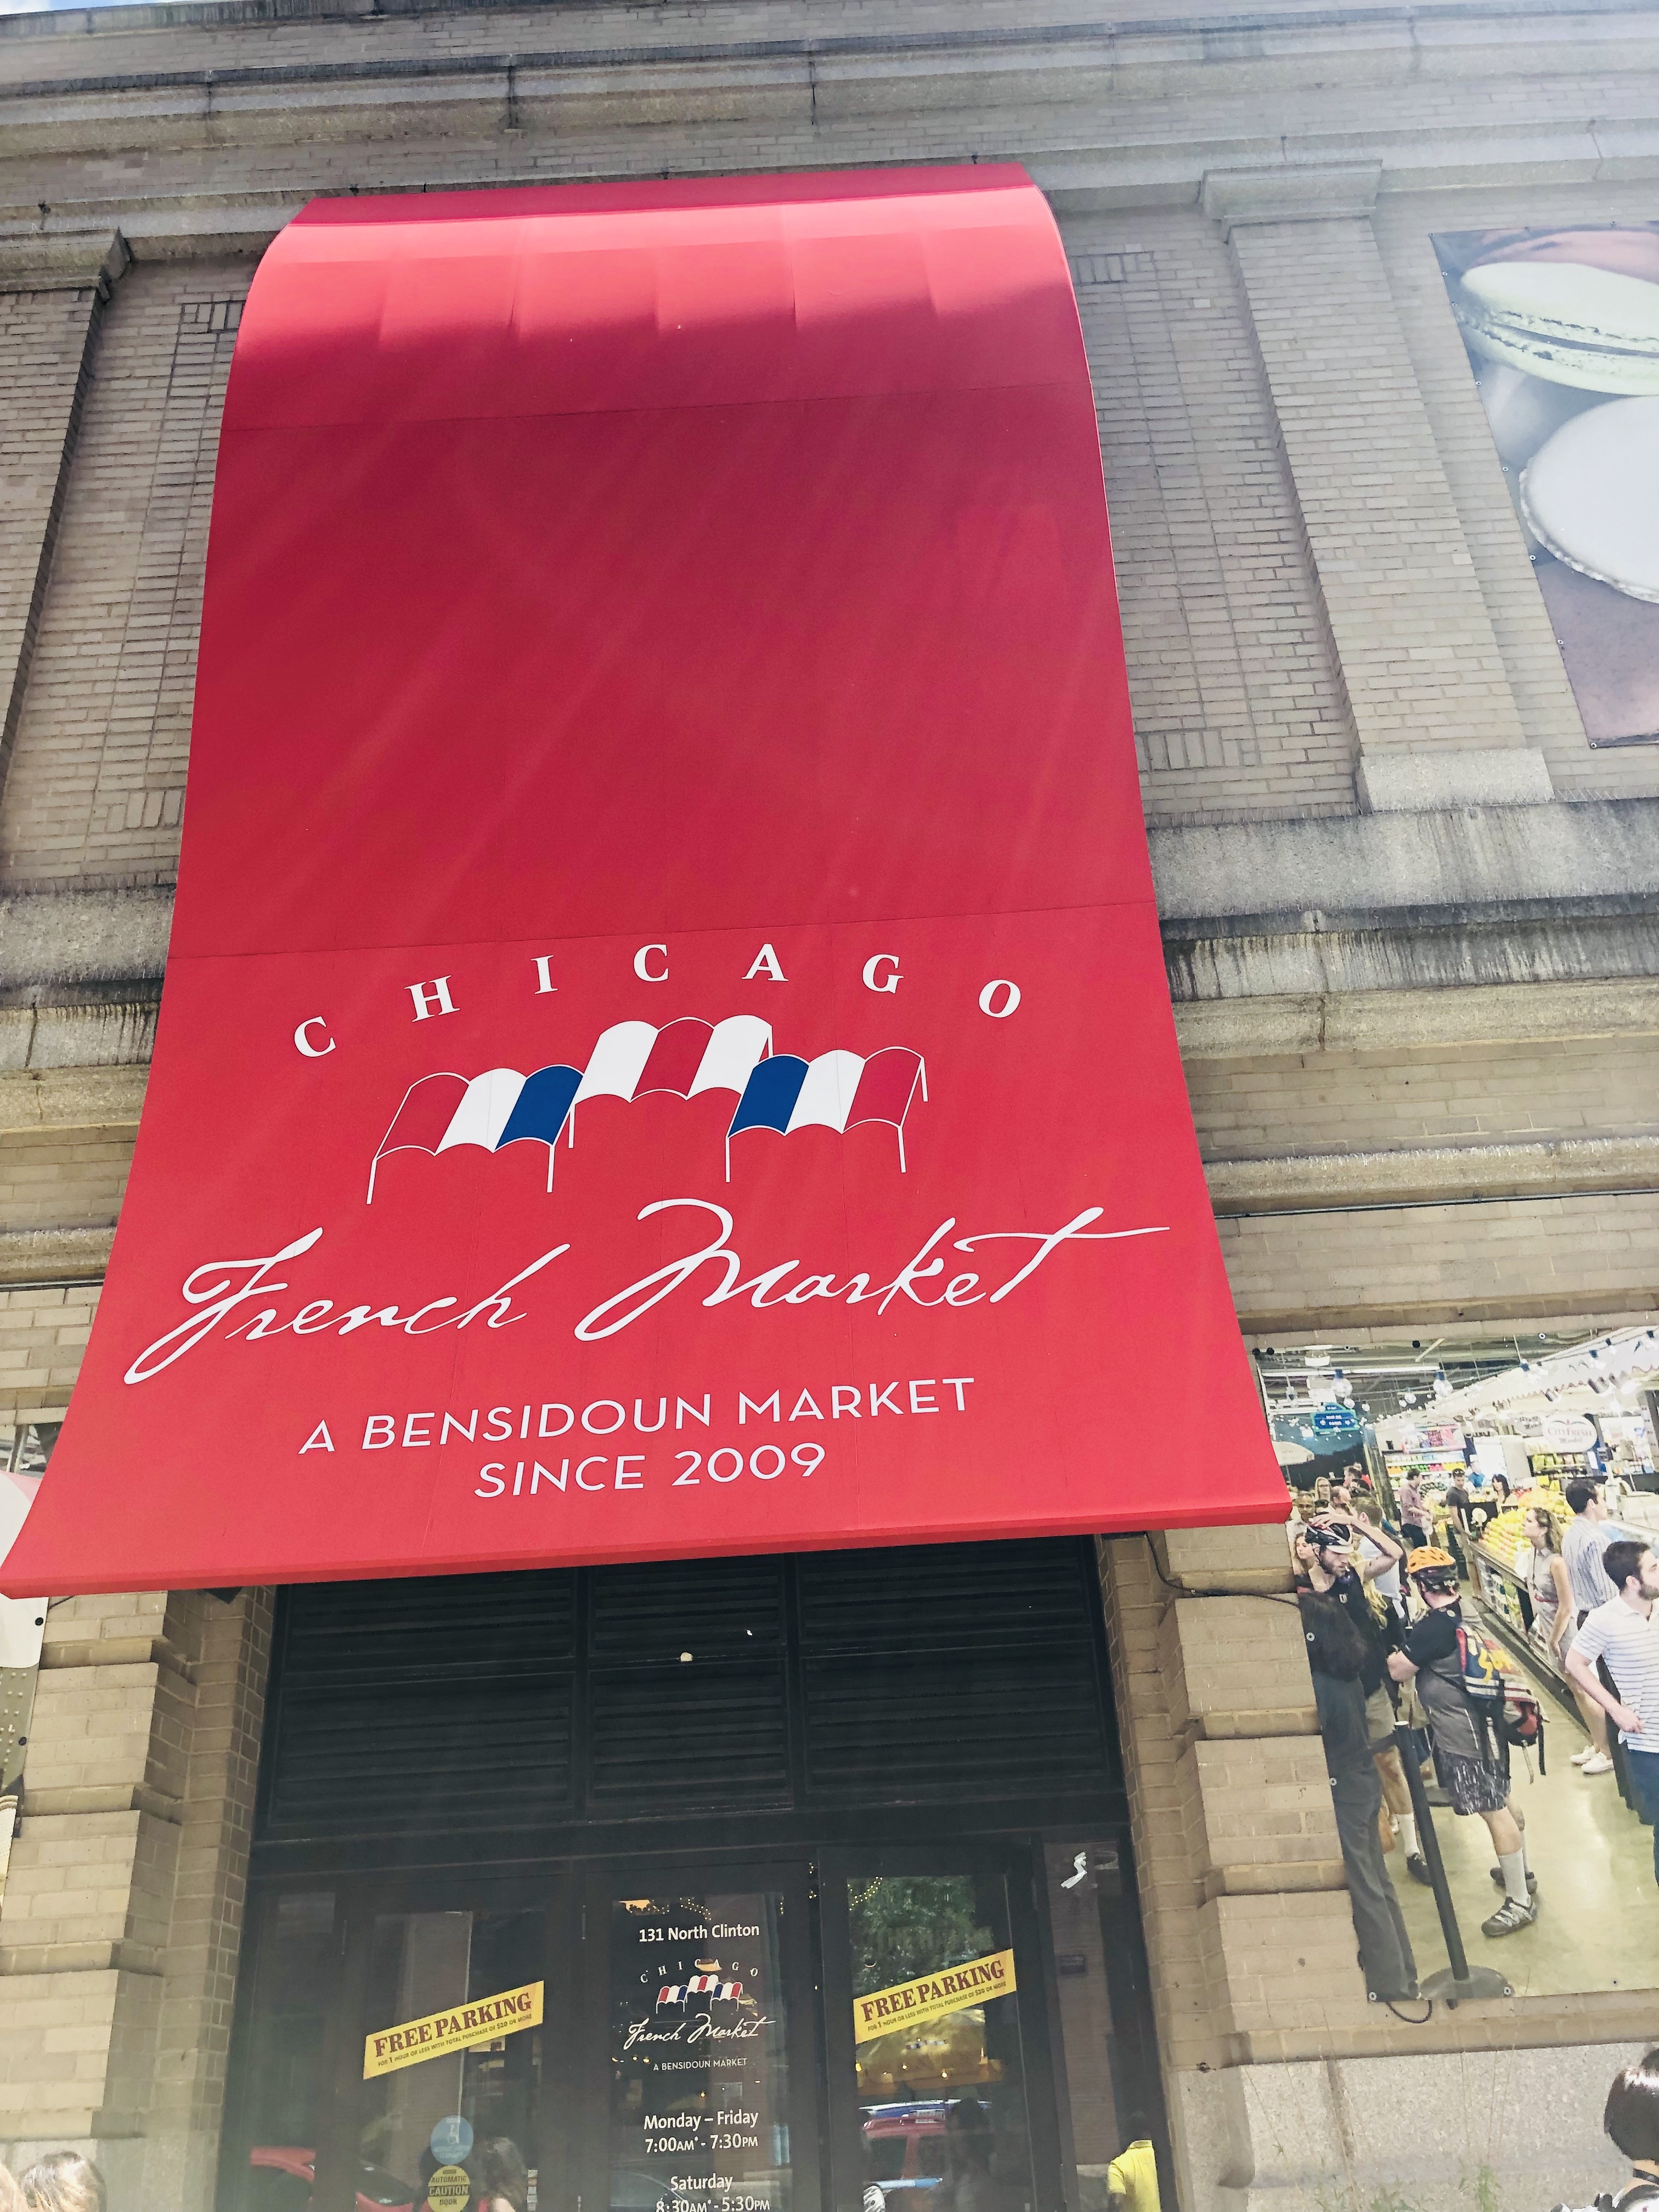 Suarez Market – Chicago French Market